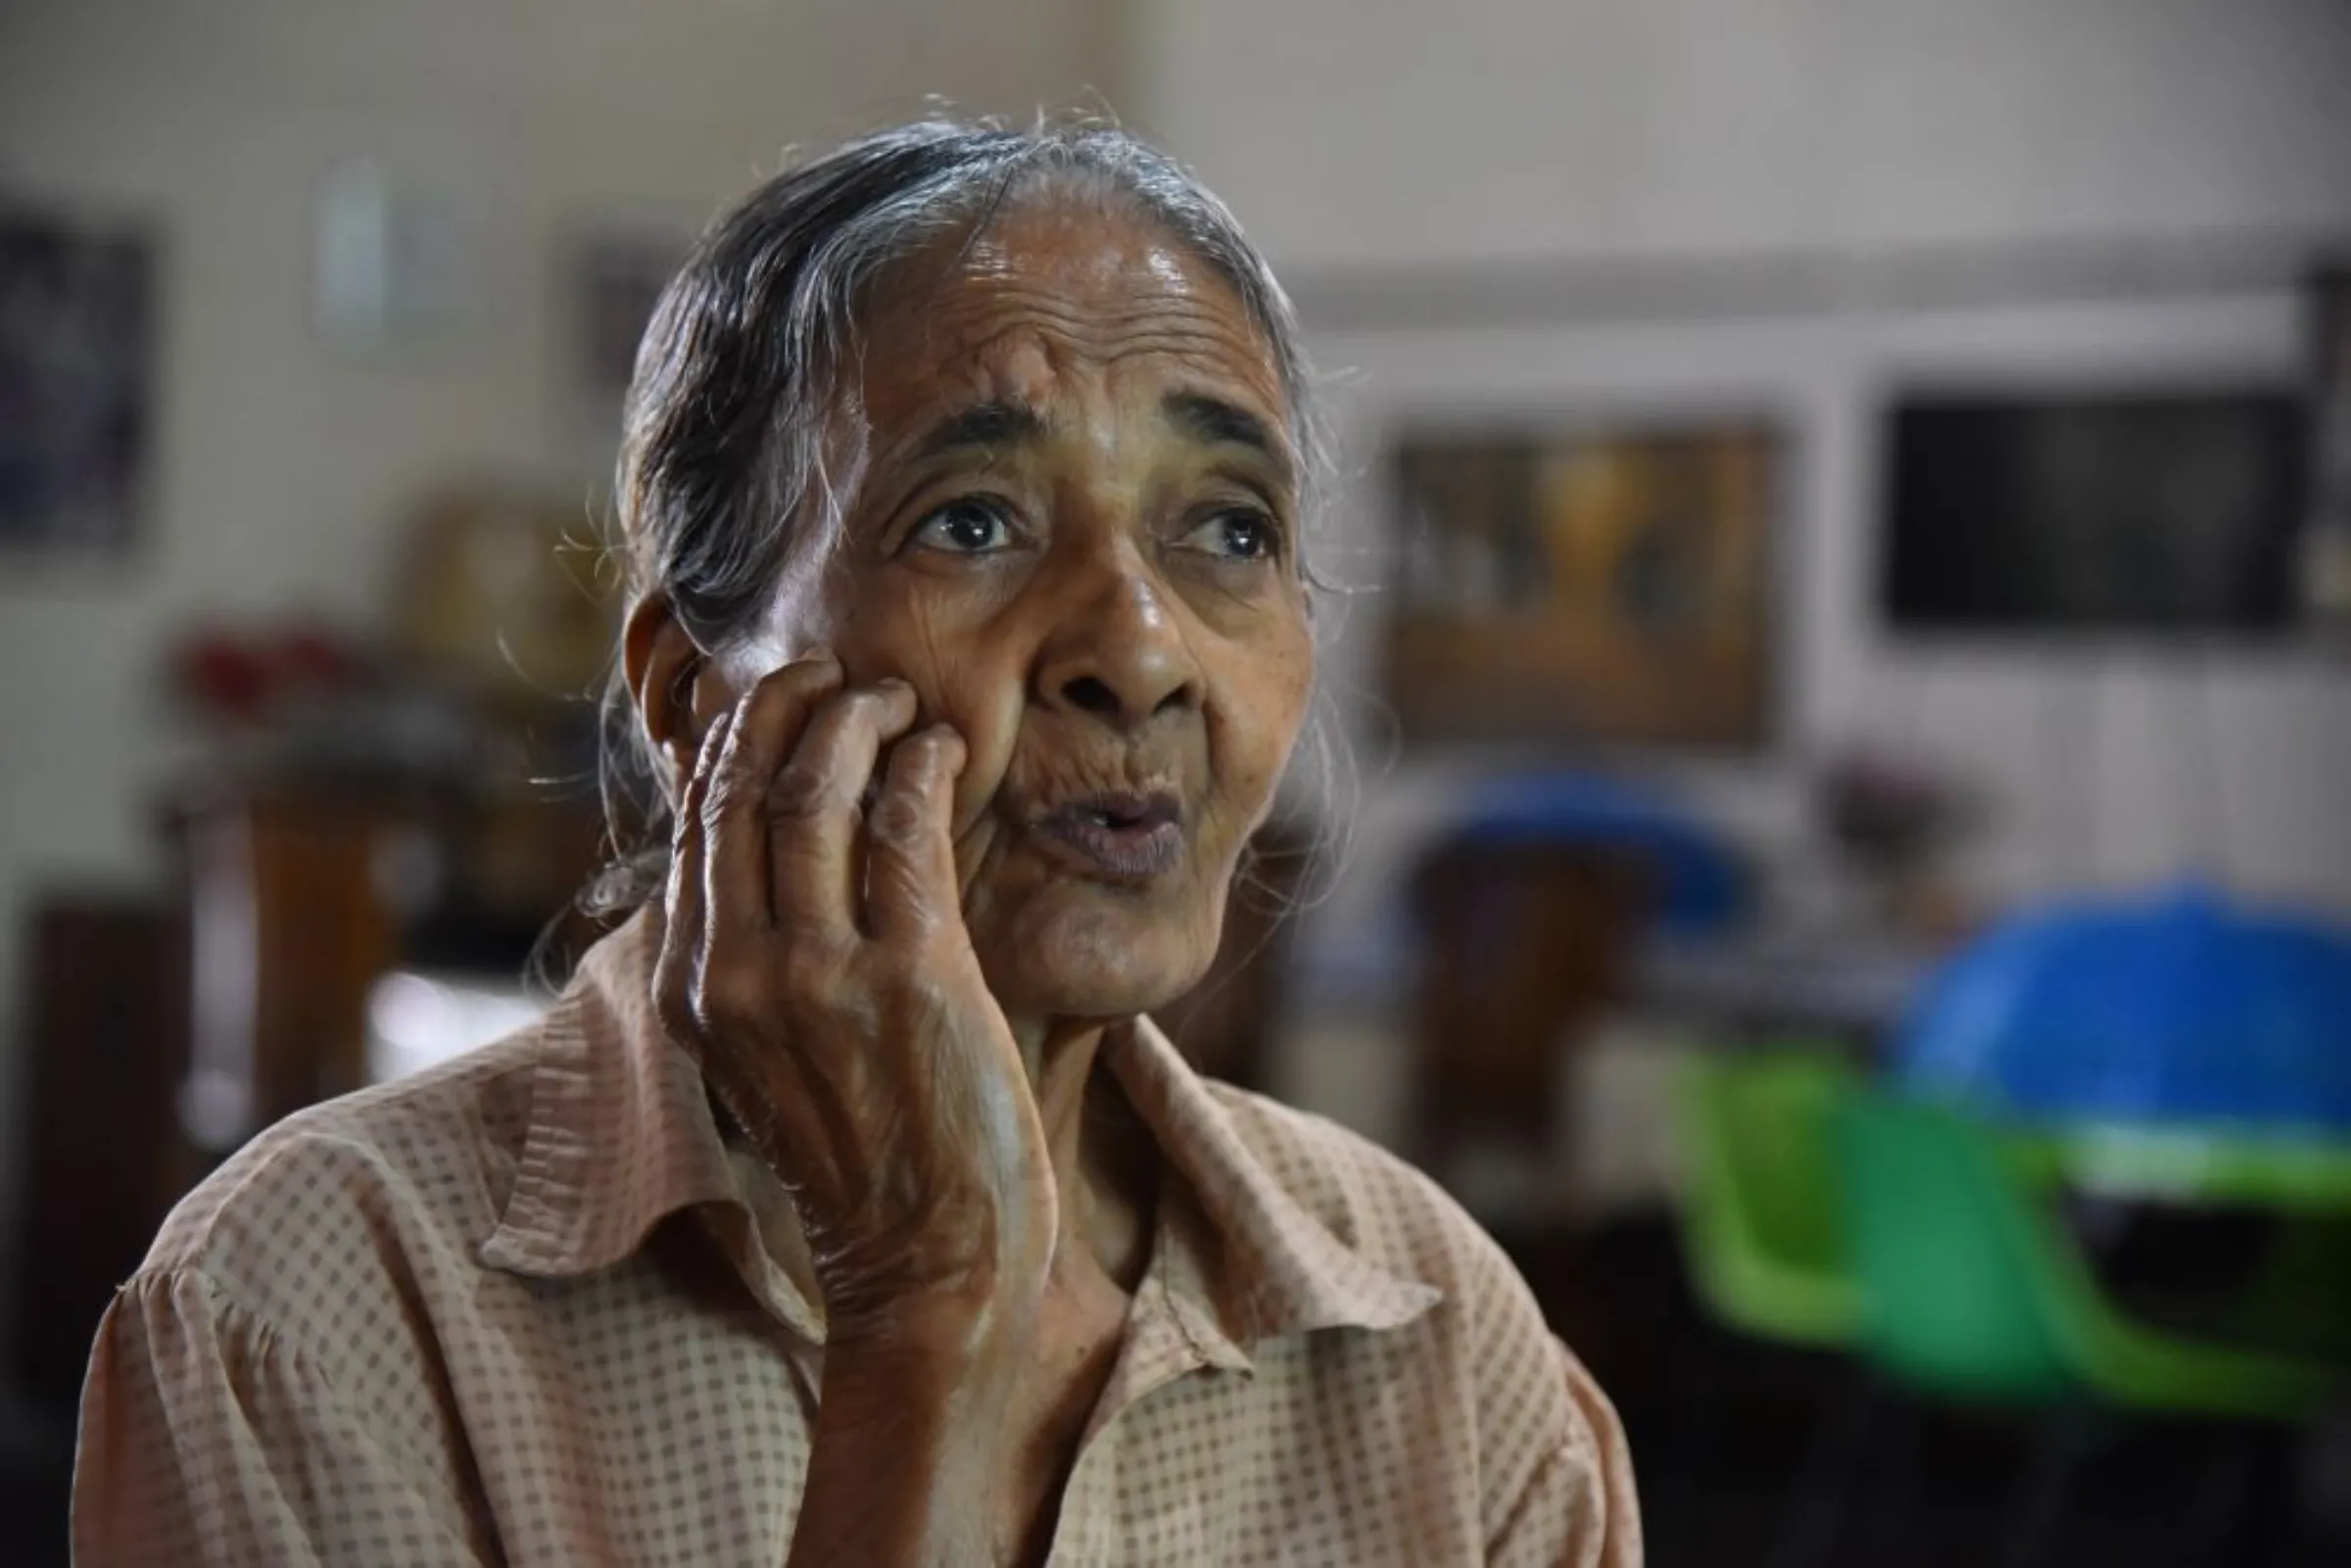 Senior citizen Irene Peiris talks about her worries over her future at an elderly care centre in Ratmalana, Sri Lanka on January 20, 2023